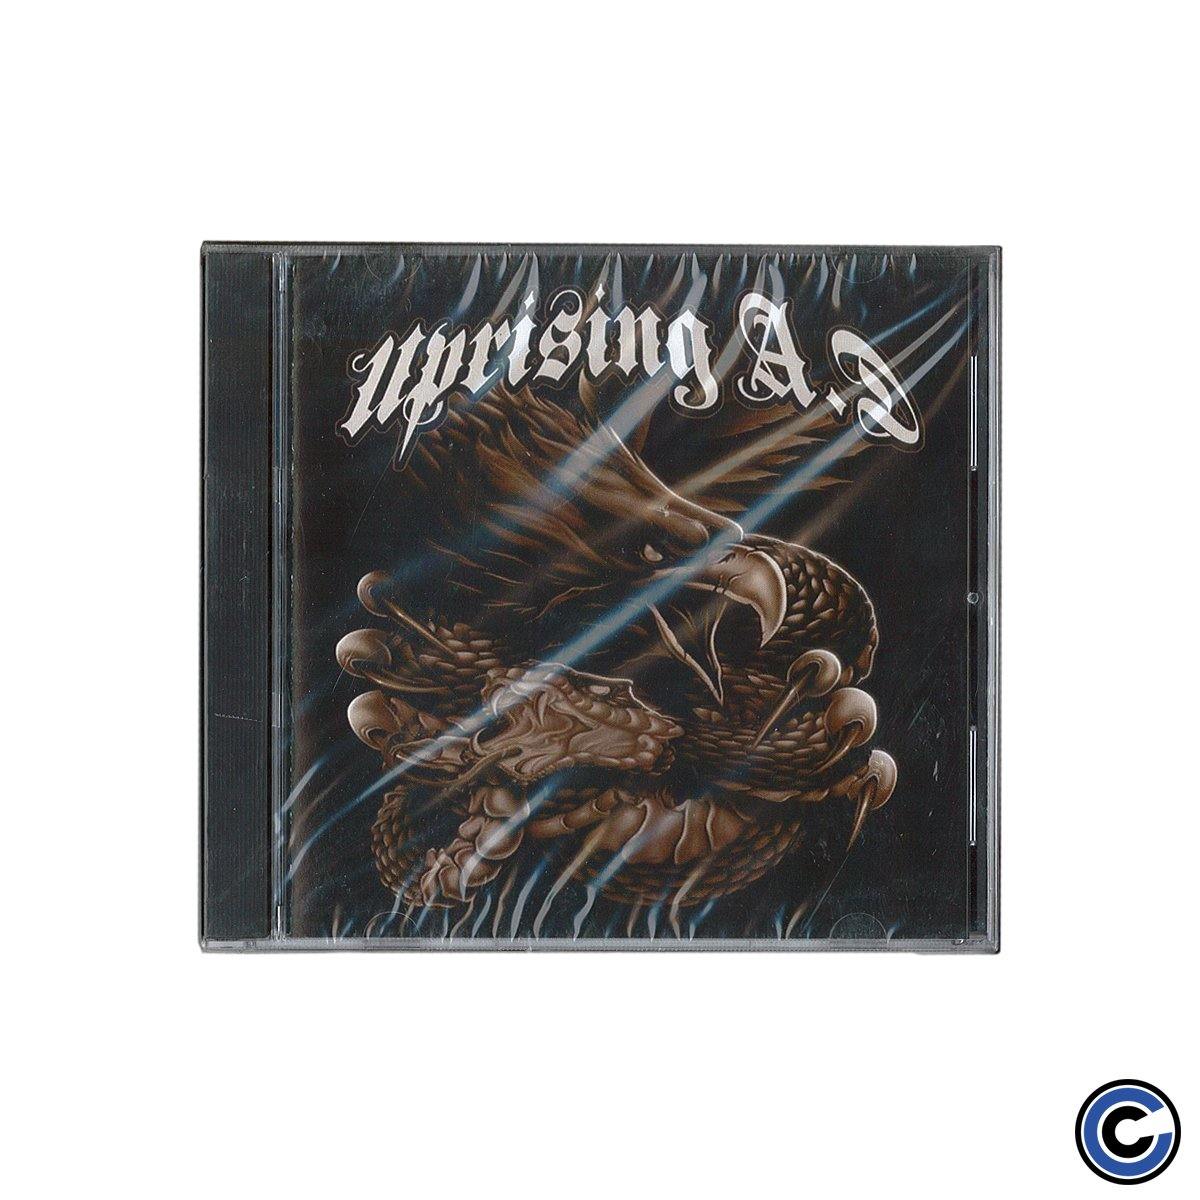 Buy – Uprising A.D. "Uprising A.D." CD – Band & Music Merch – Cold Cuts Merch